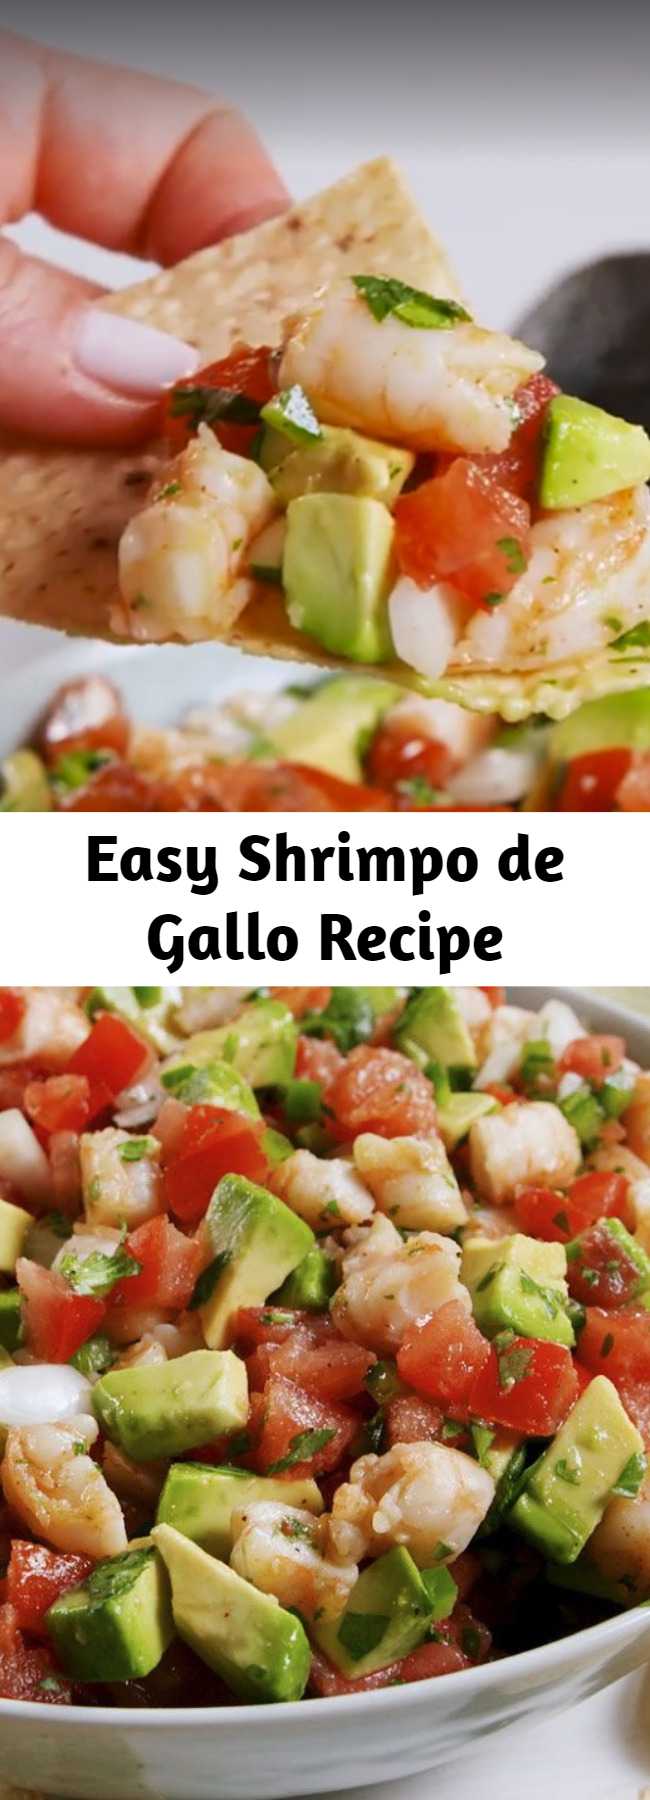 Easy Shrimpo de Gallo Recipe - Once you try this Shrimpo de Gallo, you'll never go back to pico. #shrimp #tomato #avocado #dip #partyapps #fiesta #seafoodappetizers